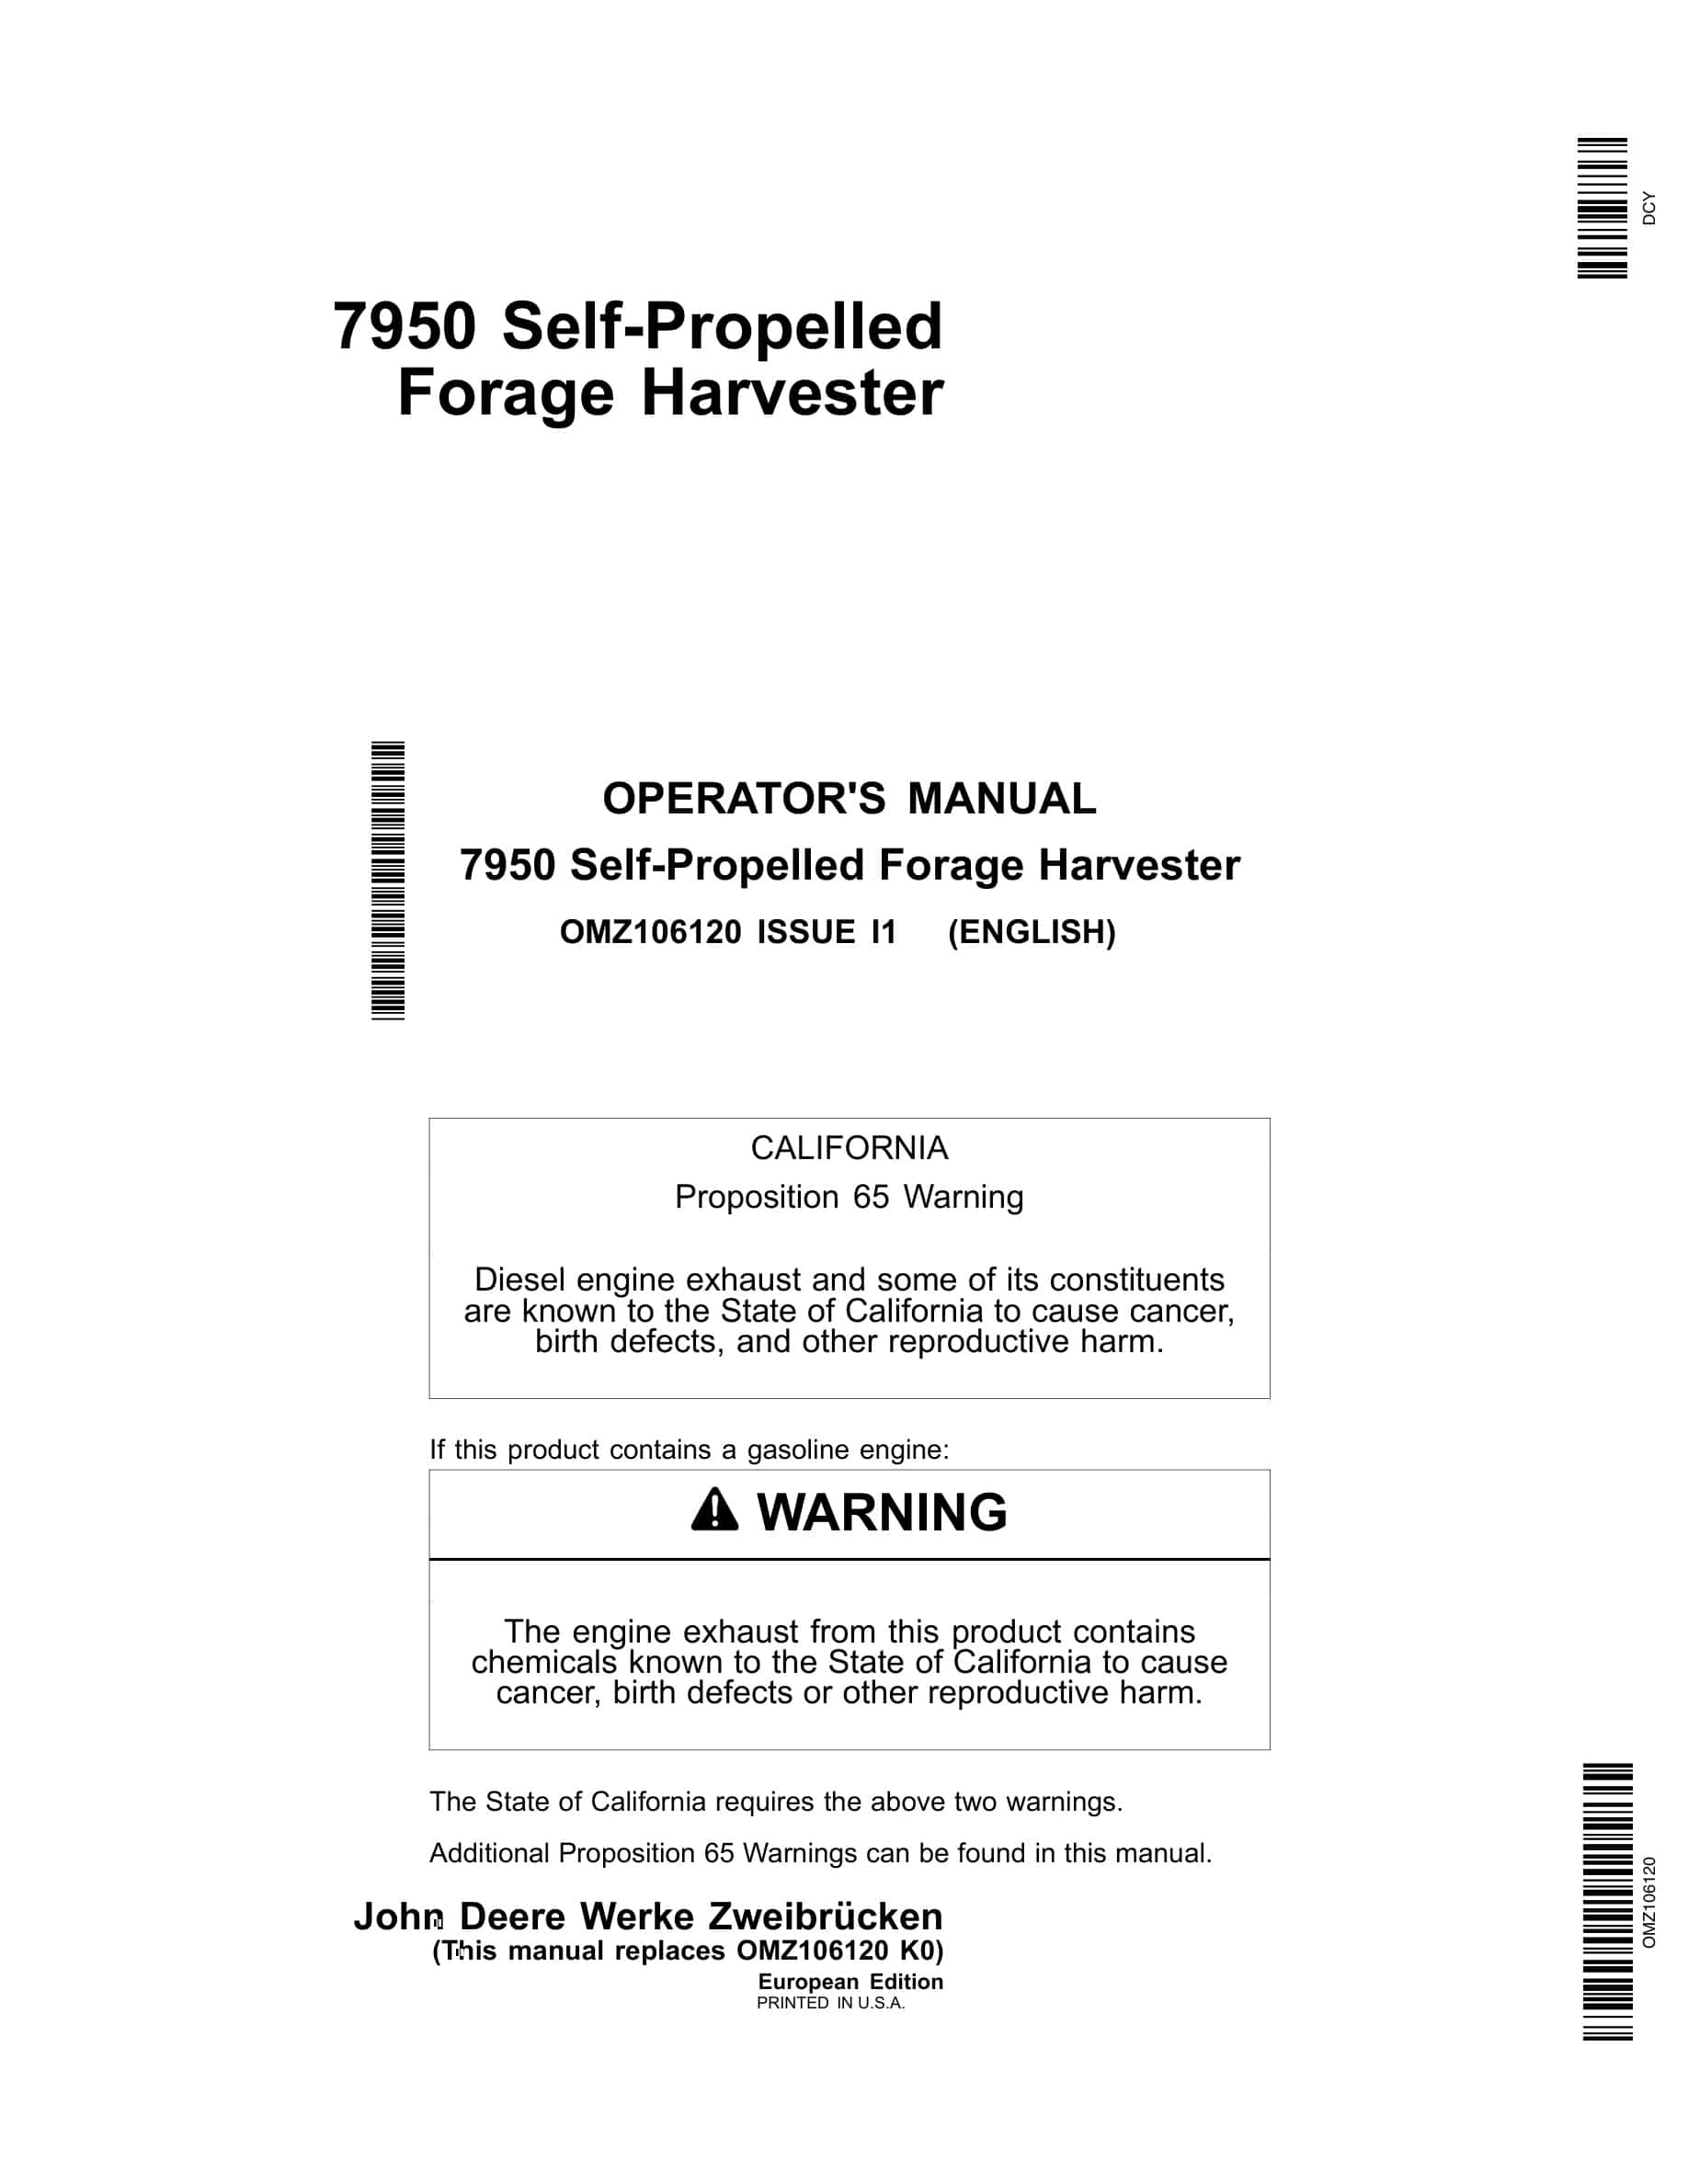 John Deere 7950 Self-Propelled Forage Harvester Operator Manual OMZ106120-1